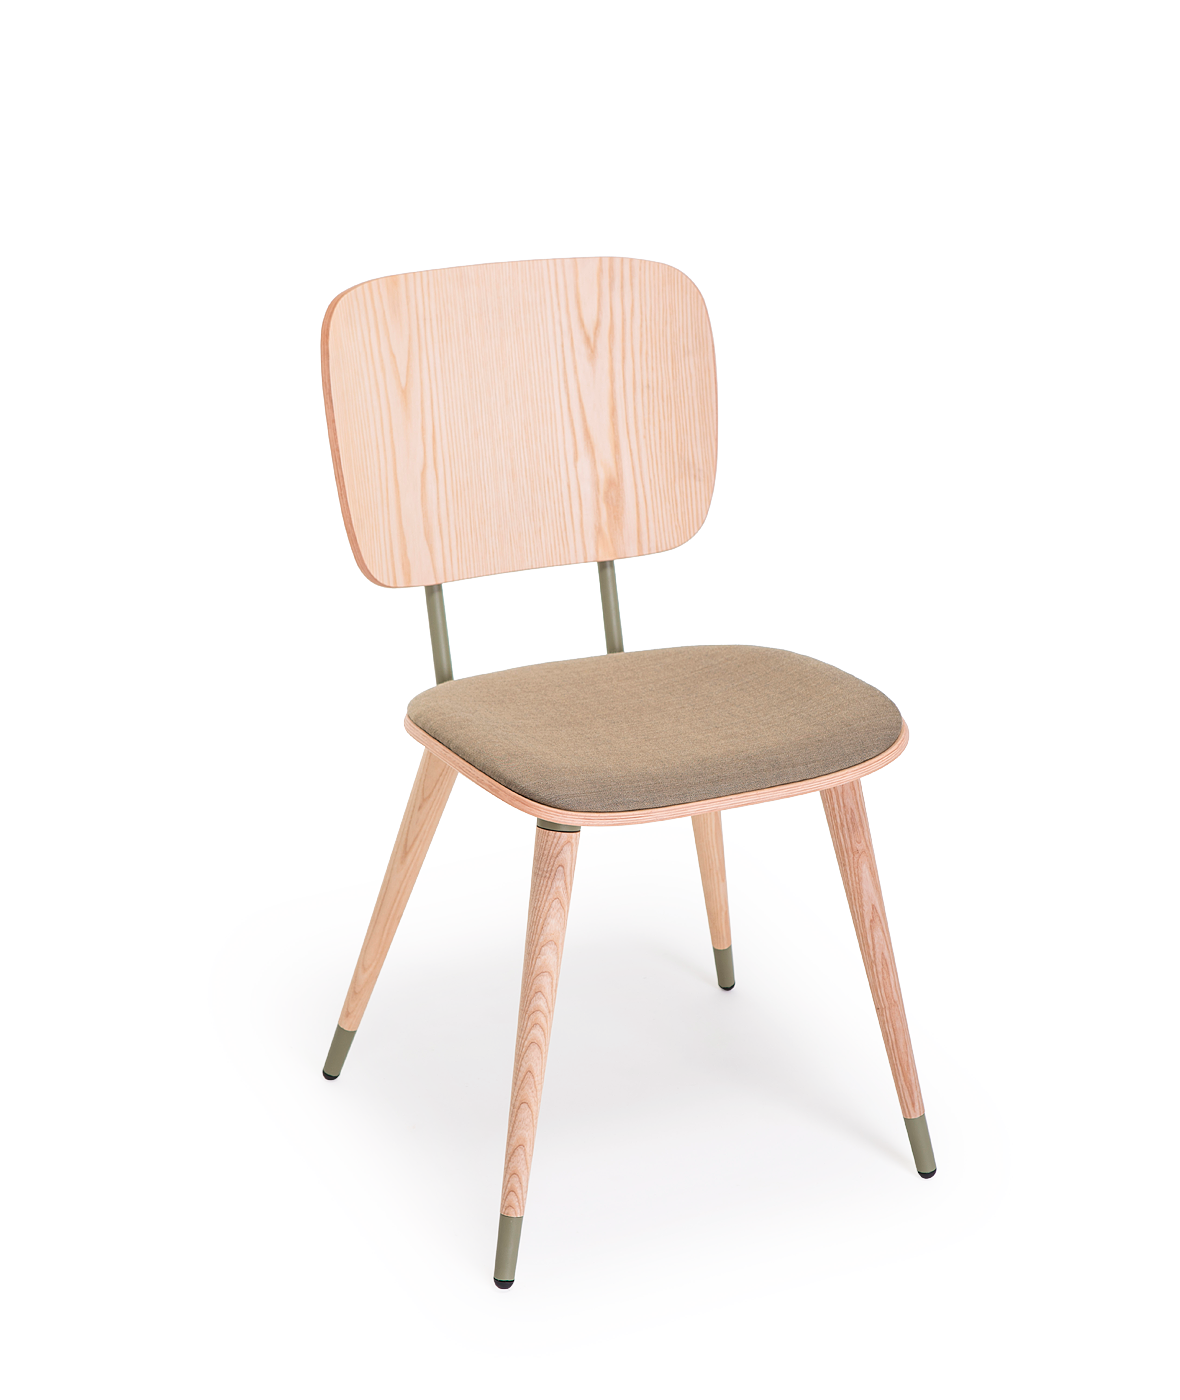 Vergés - ABC chair with wooden legs